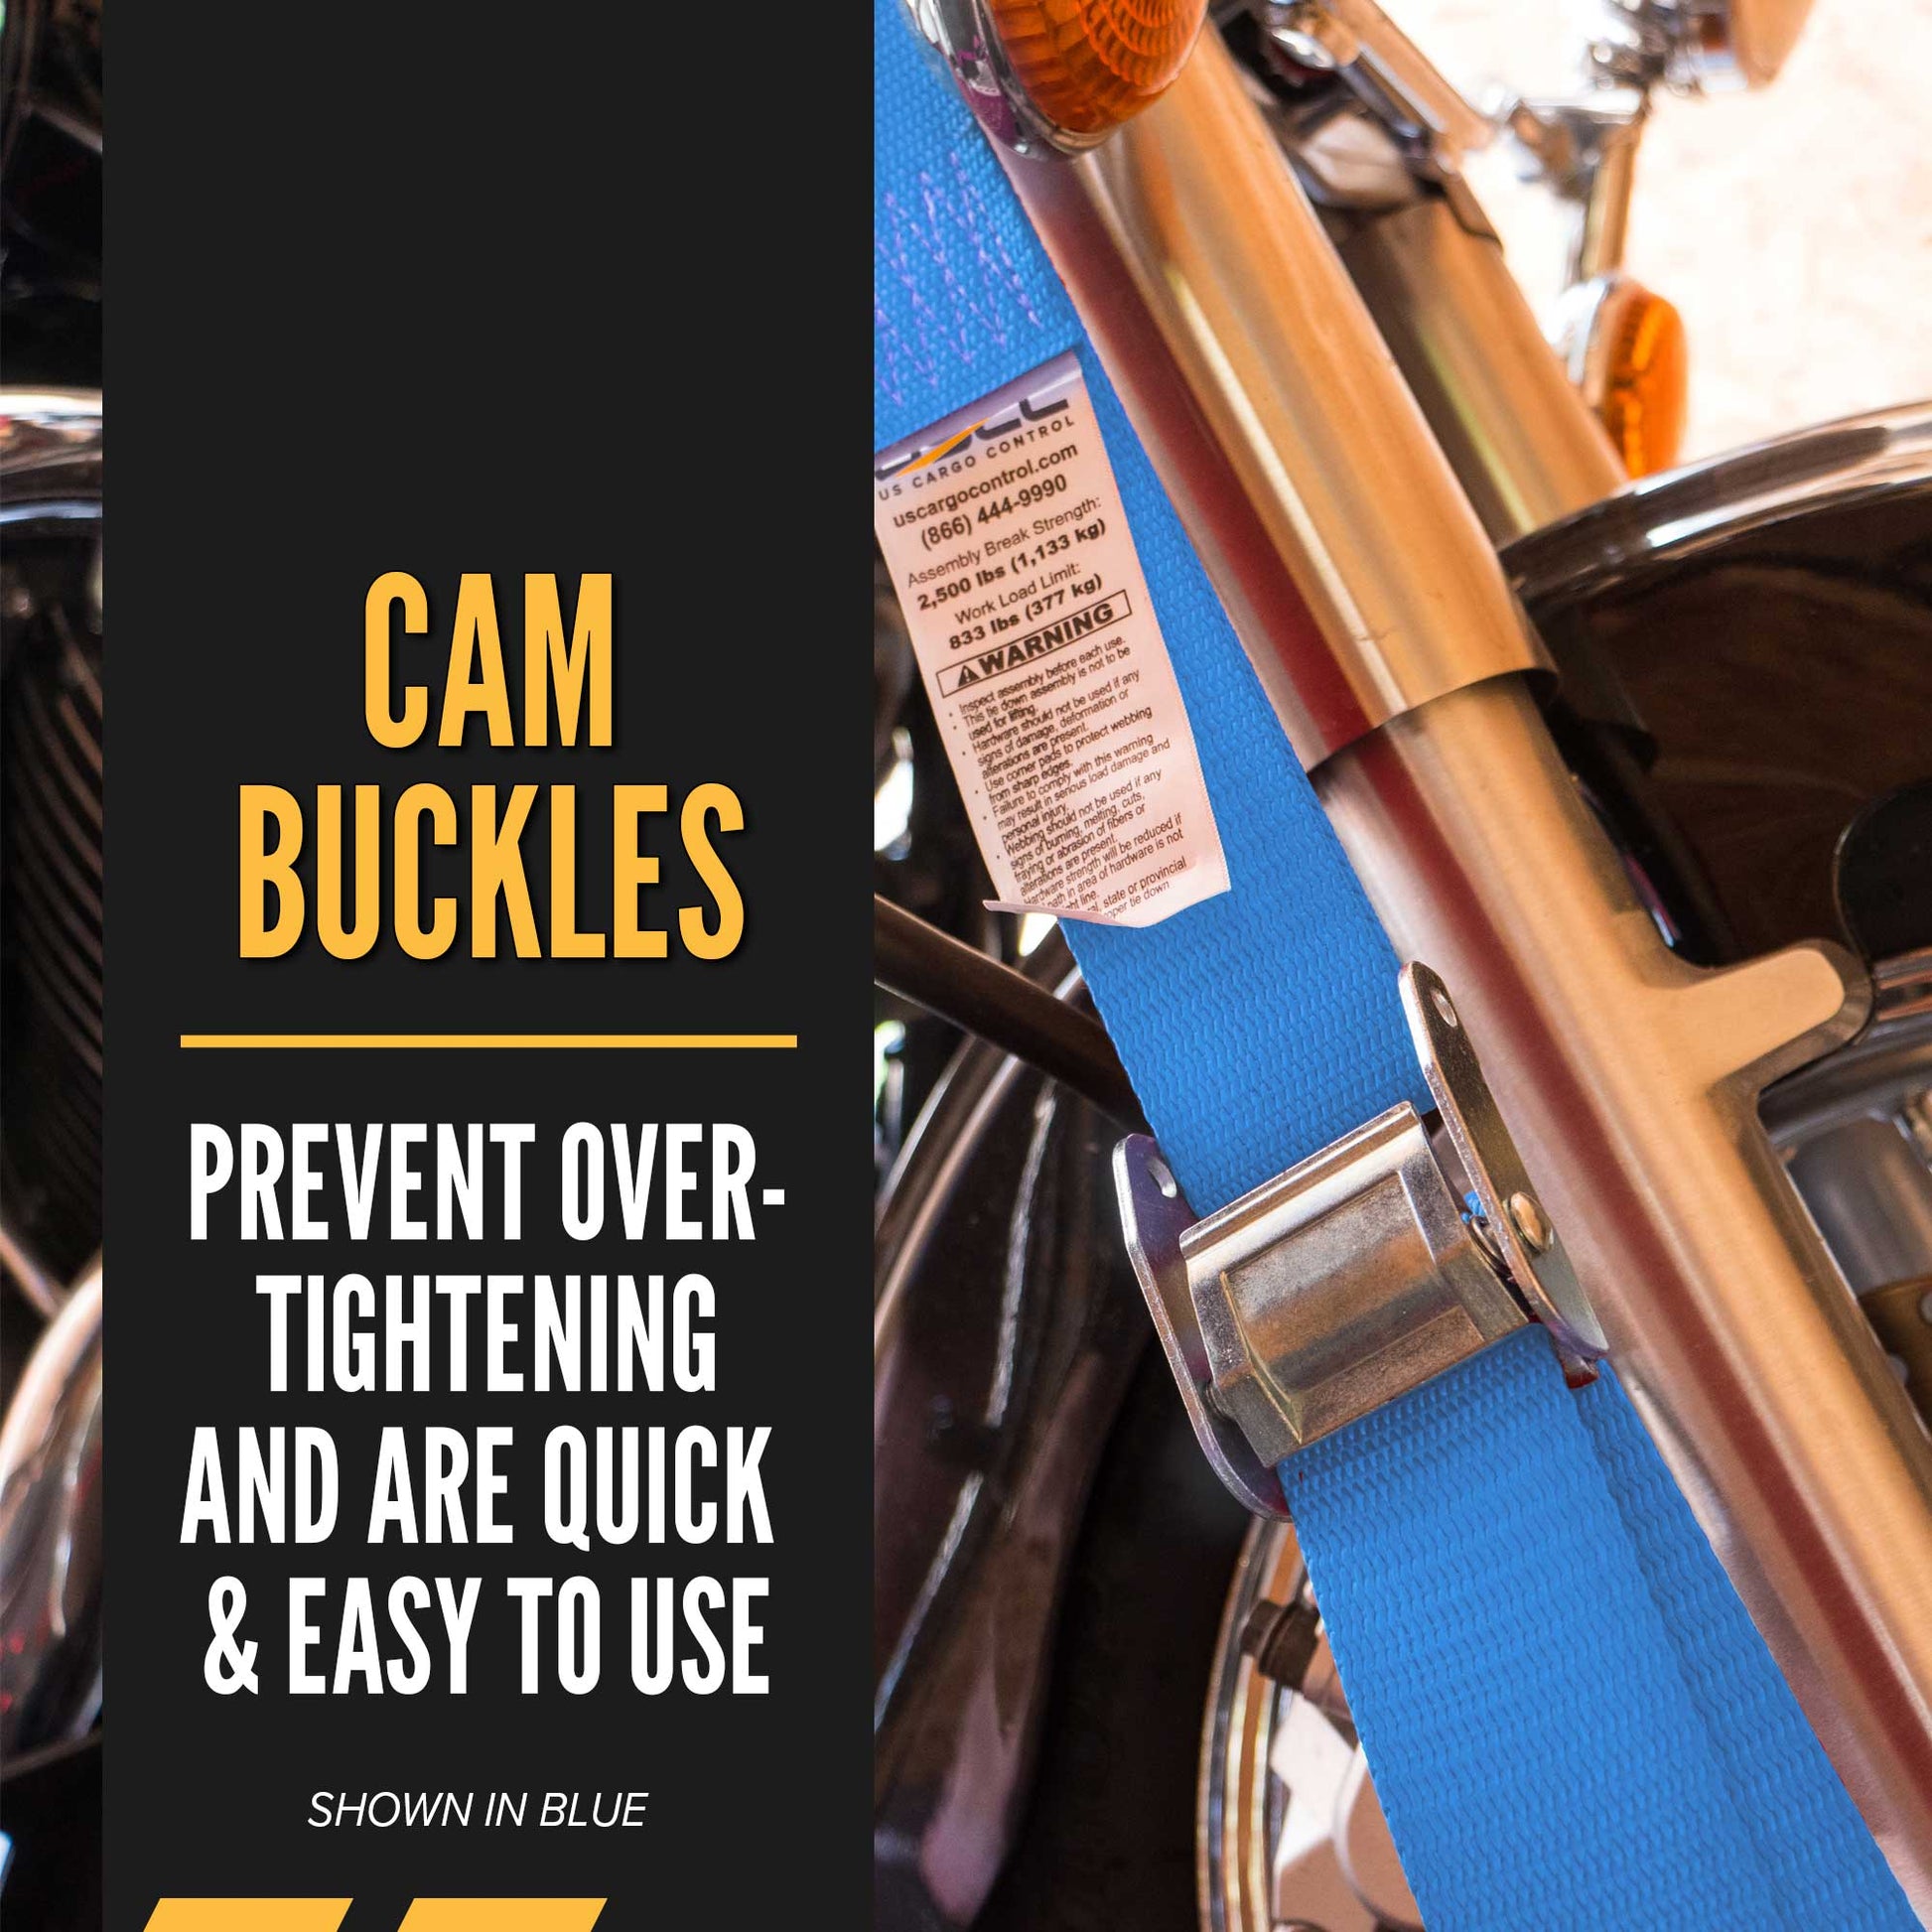  cam buckles prevent over-tightening